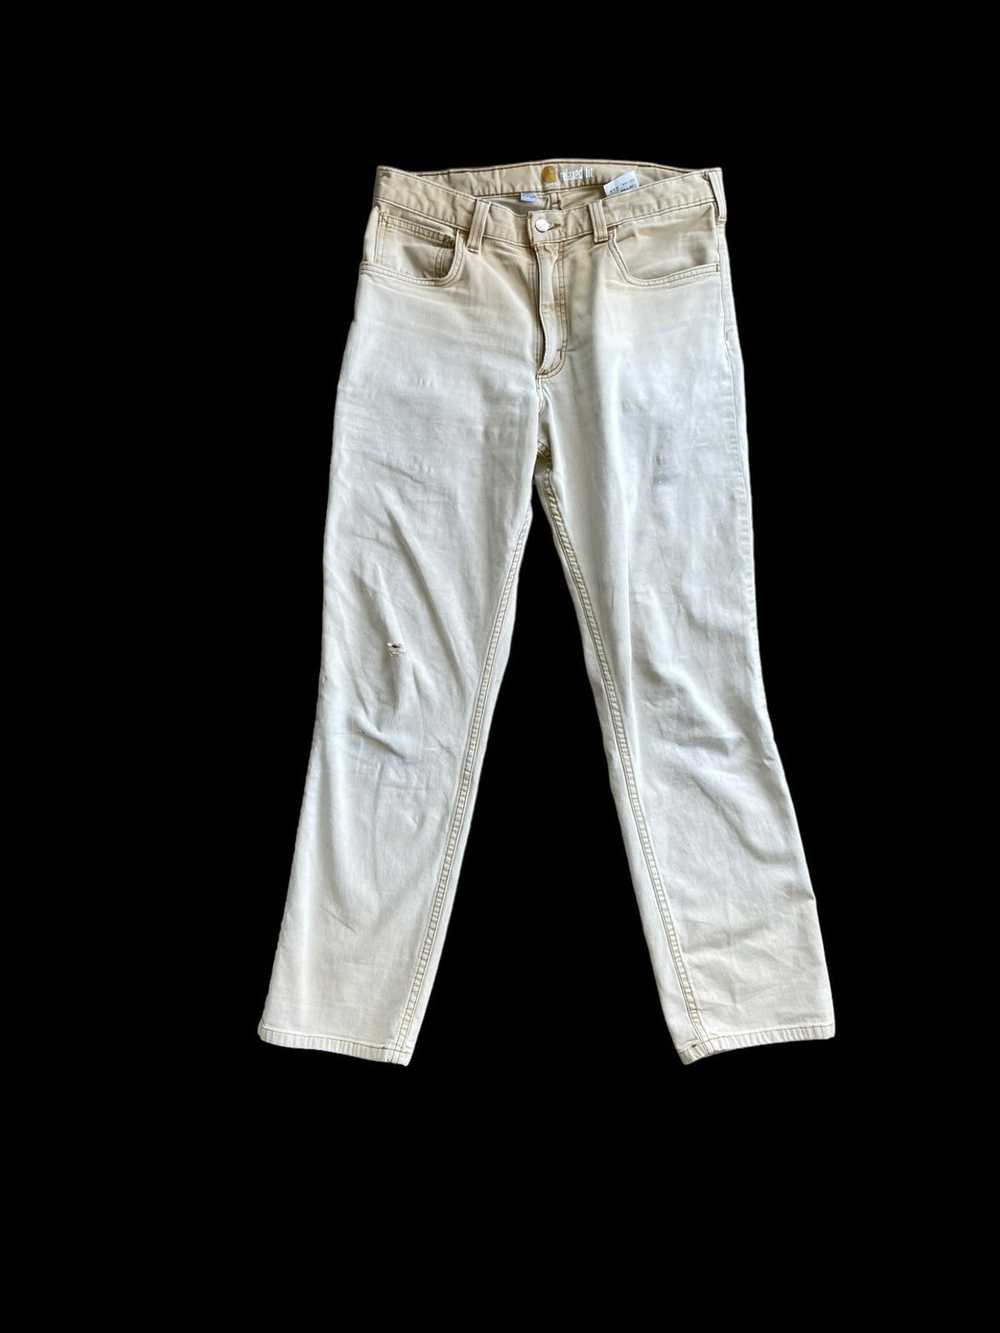 Carhartt Sun faded carhartt work pants: size 32/32 - image 4